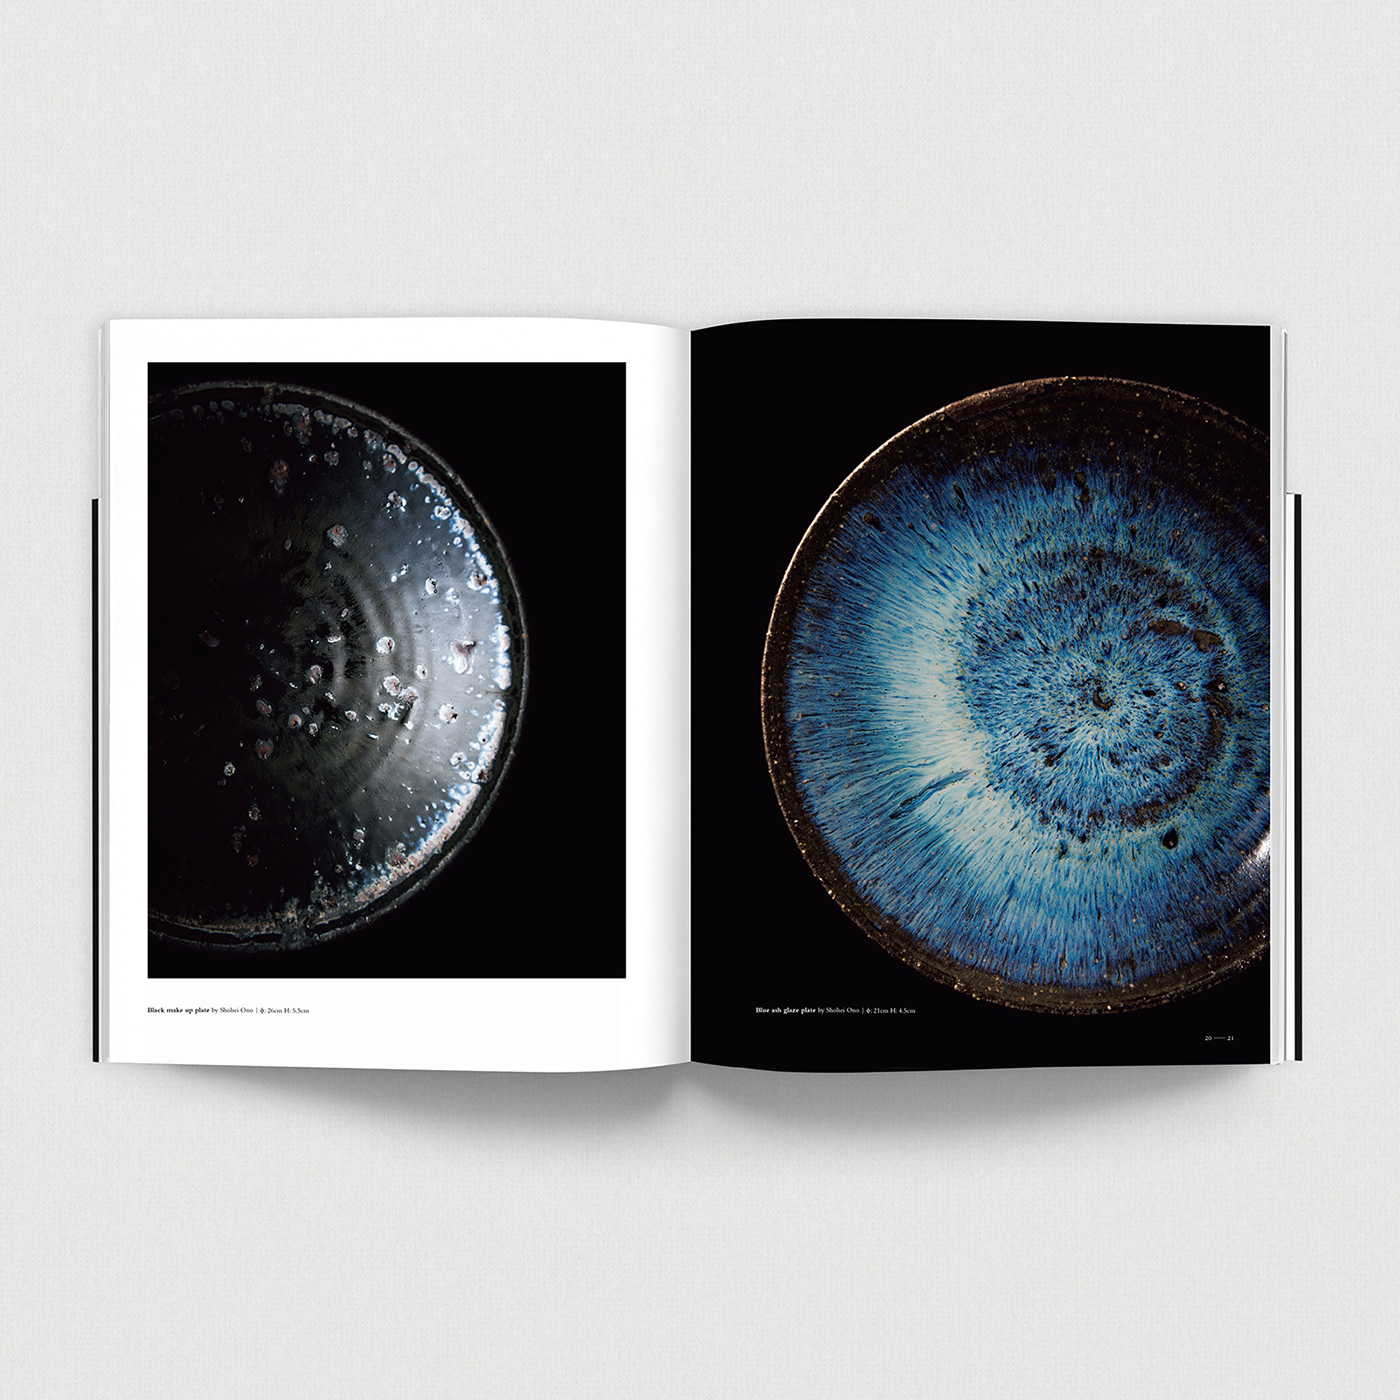 book design editorial Photography  Pottery japan craft